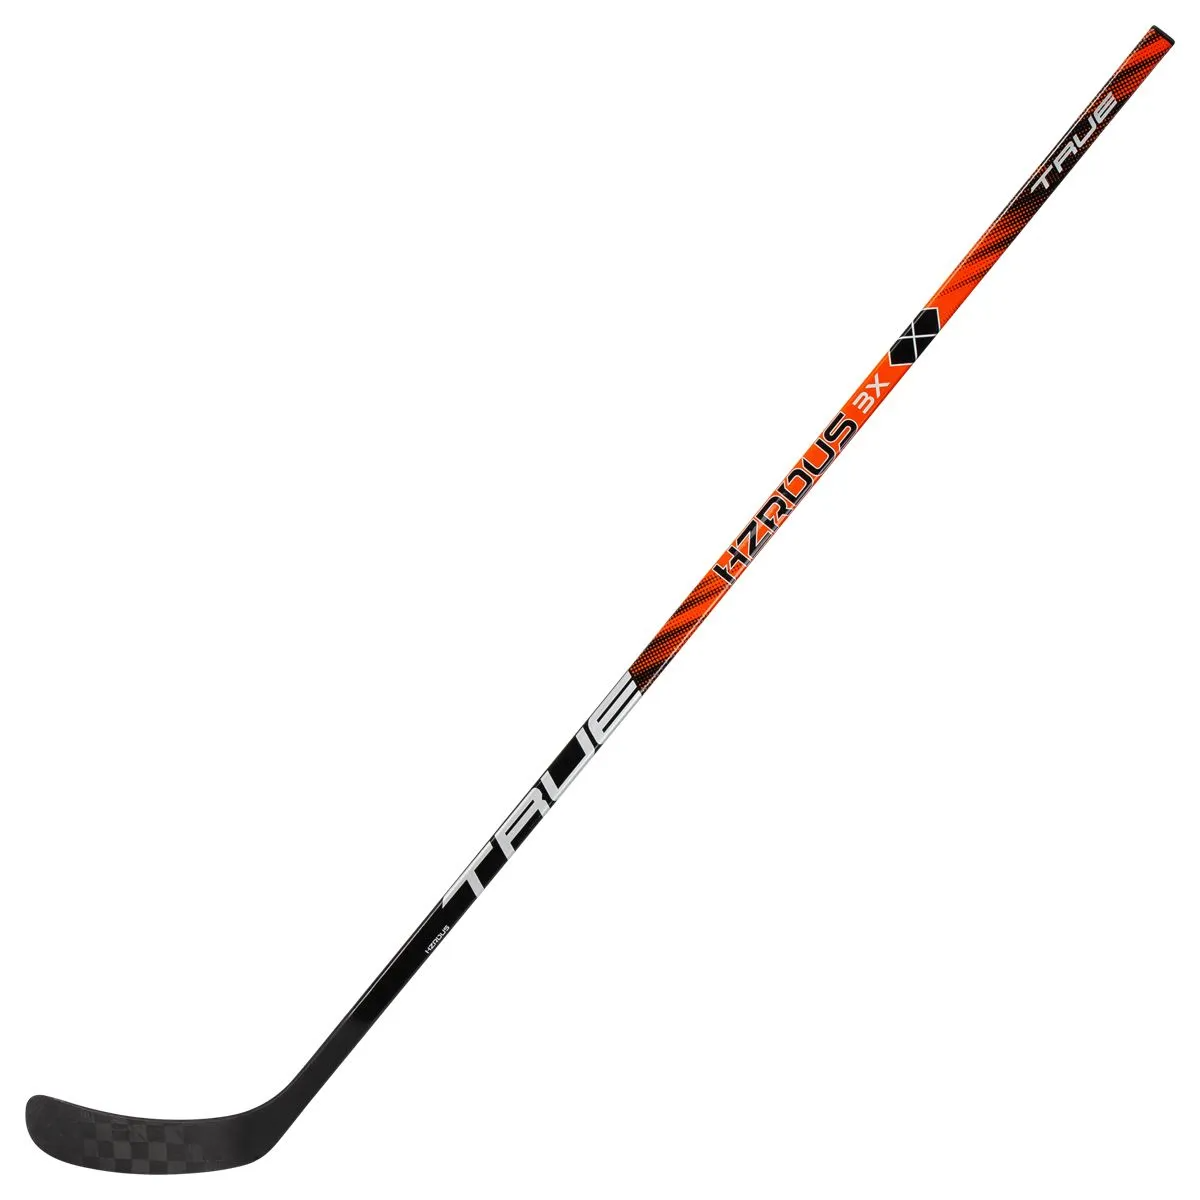 TRUE Hzrdus 3X Senior Composite Hockey Stick